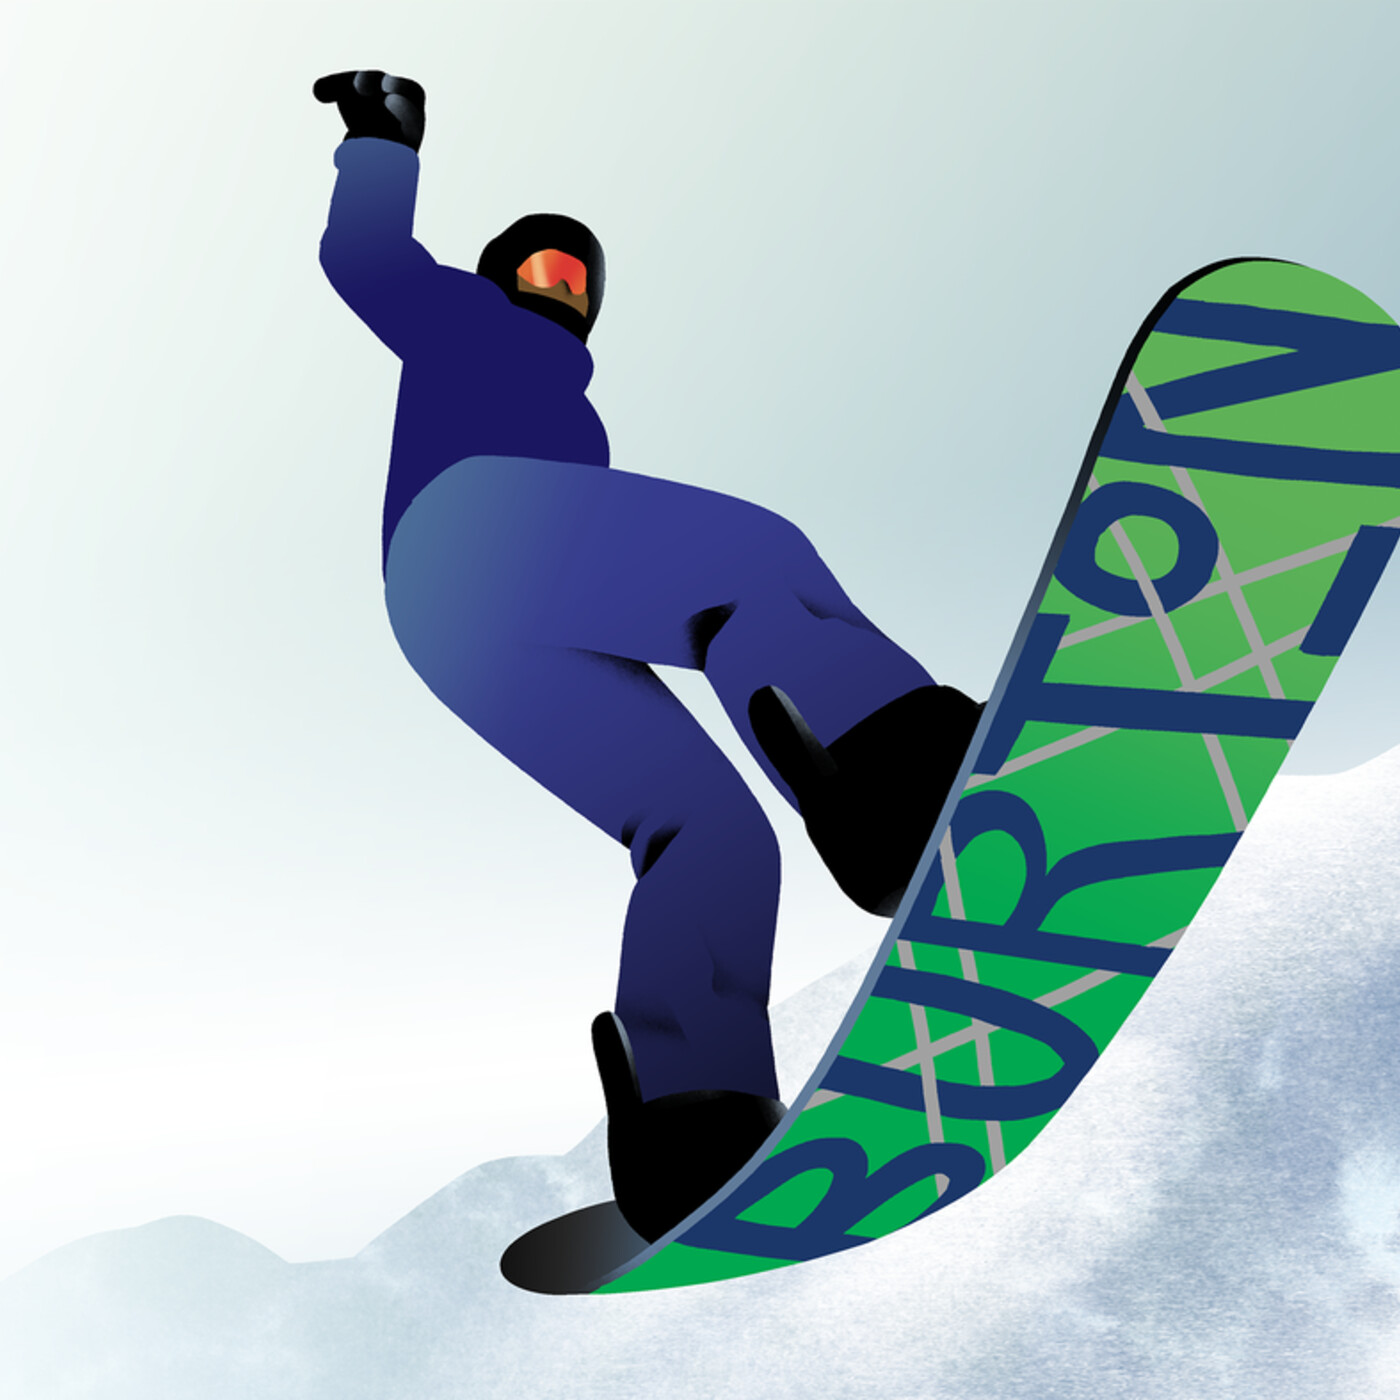 Burton Snowboards: Jake Carpenter